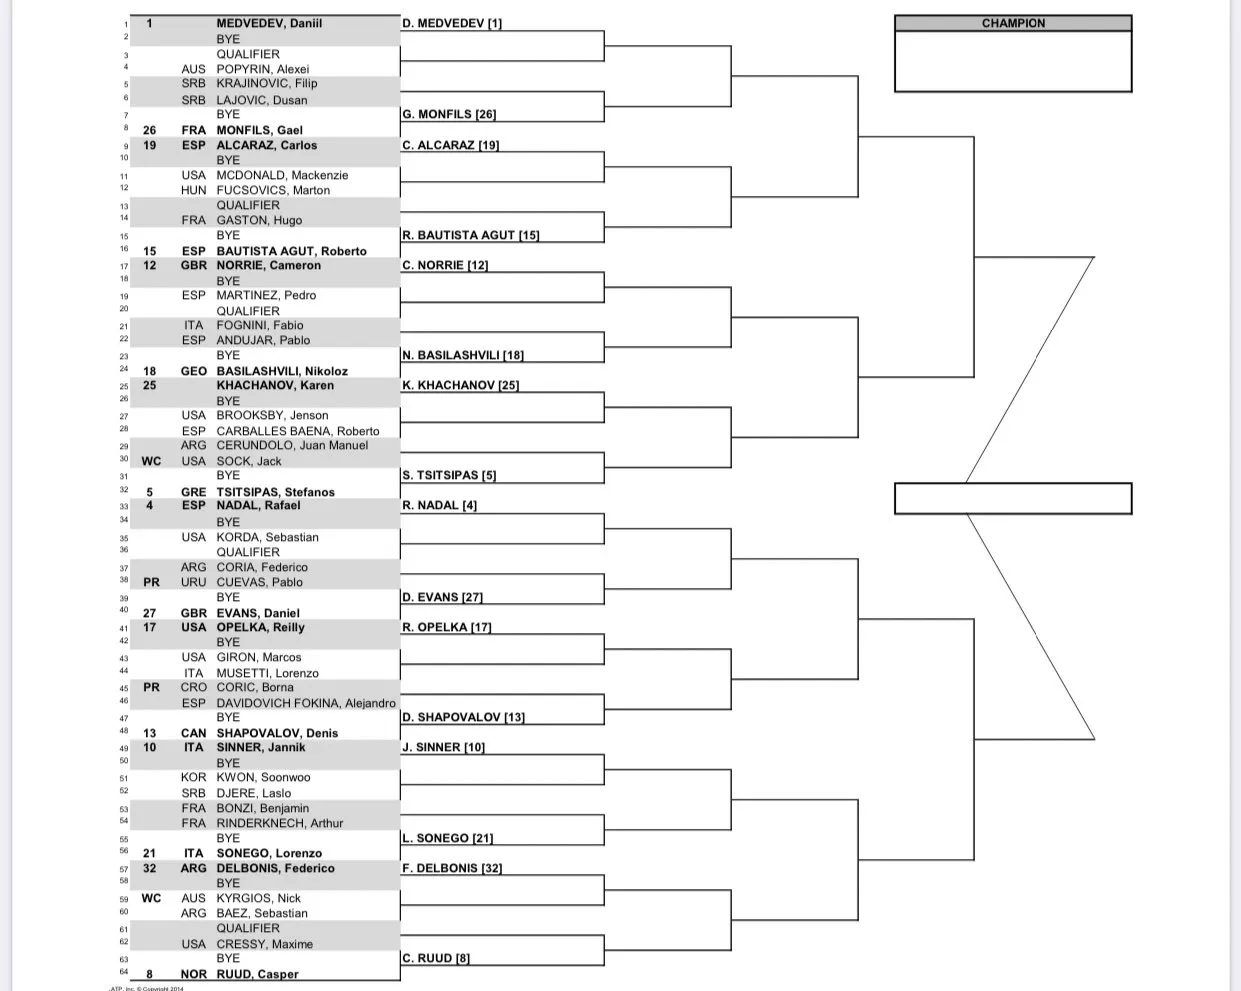 2022 BNP Paribas Open Indian Wells draw - part1